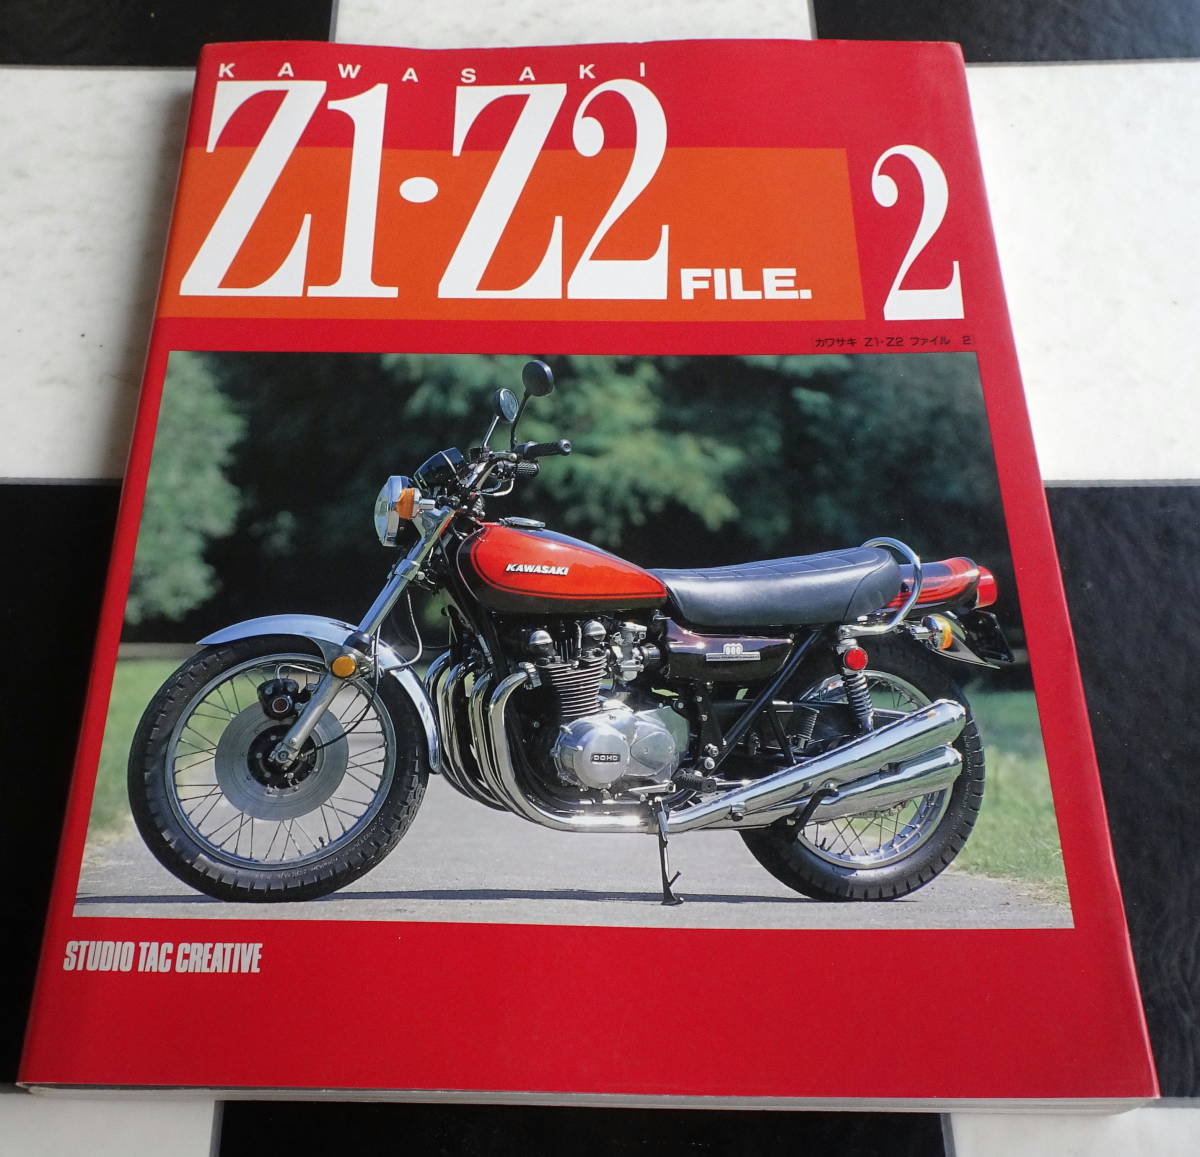 [Kawasaki]Z1 *Z2 File.2 Kawasaki Z файл 900RS SUPER FOUR техническое обслуживание Z1 Assembly&Preparation Manual